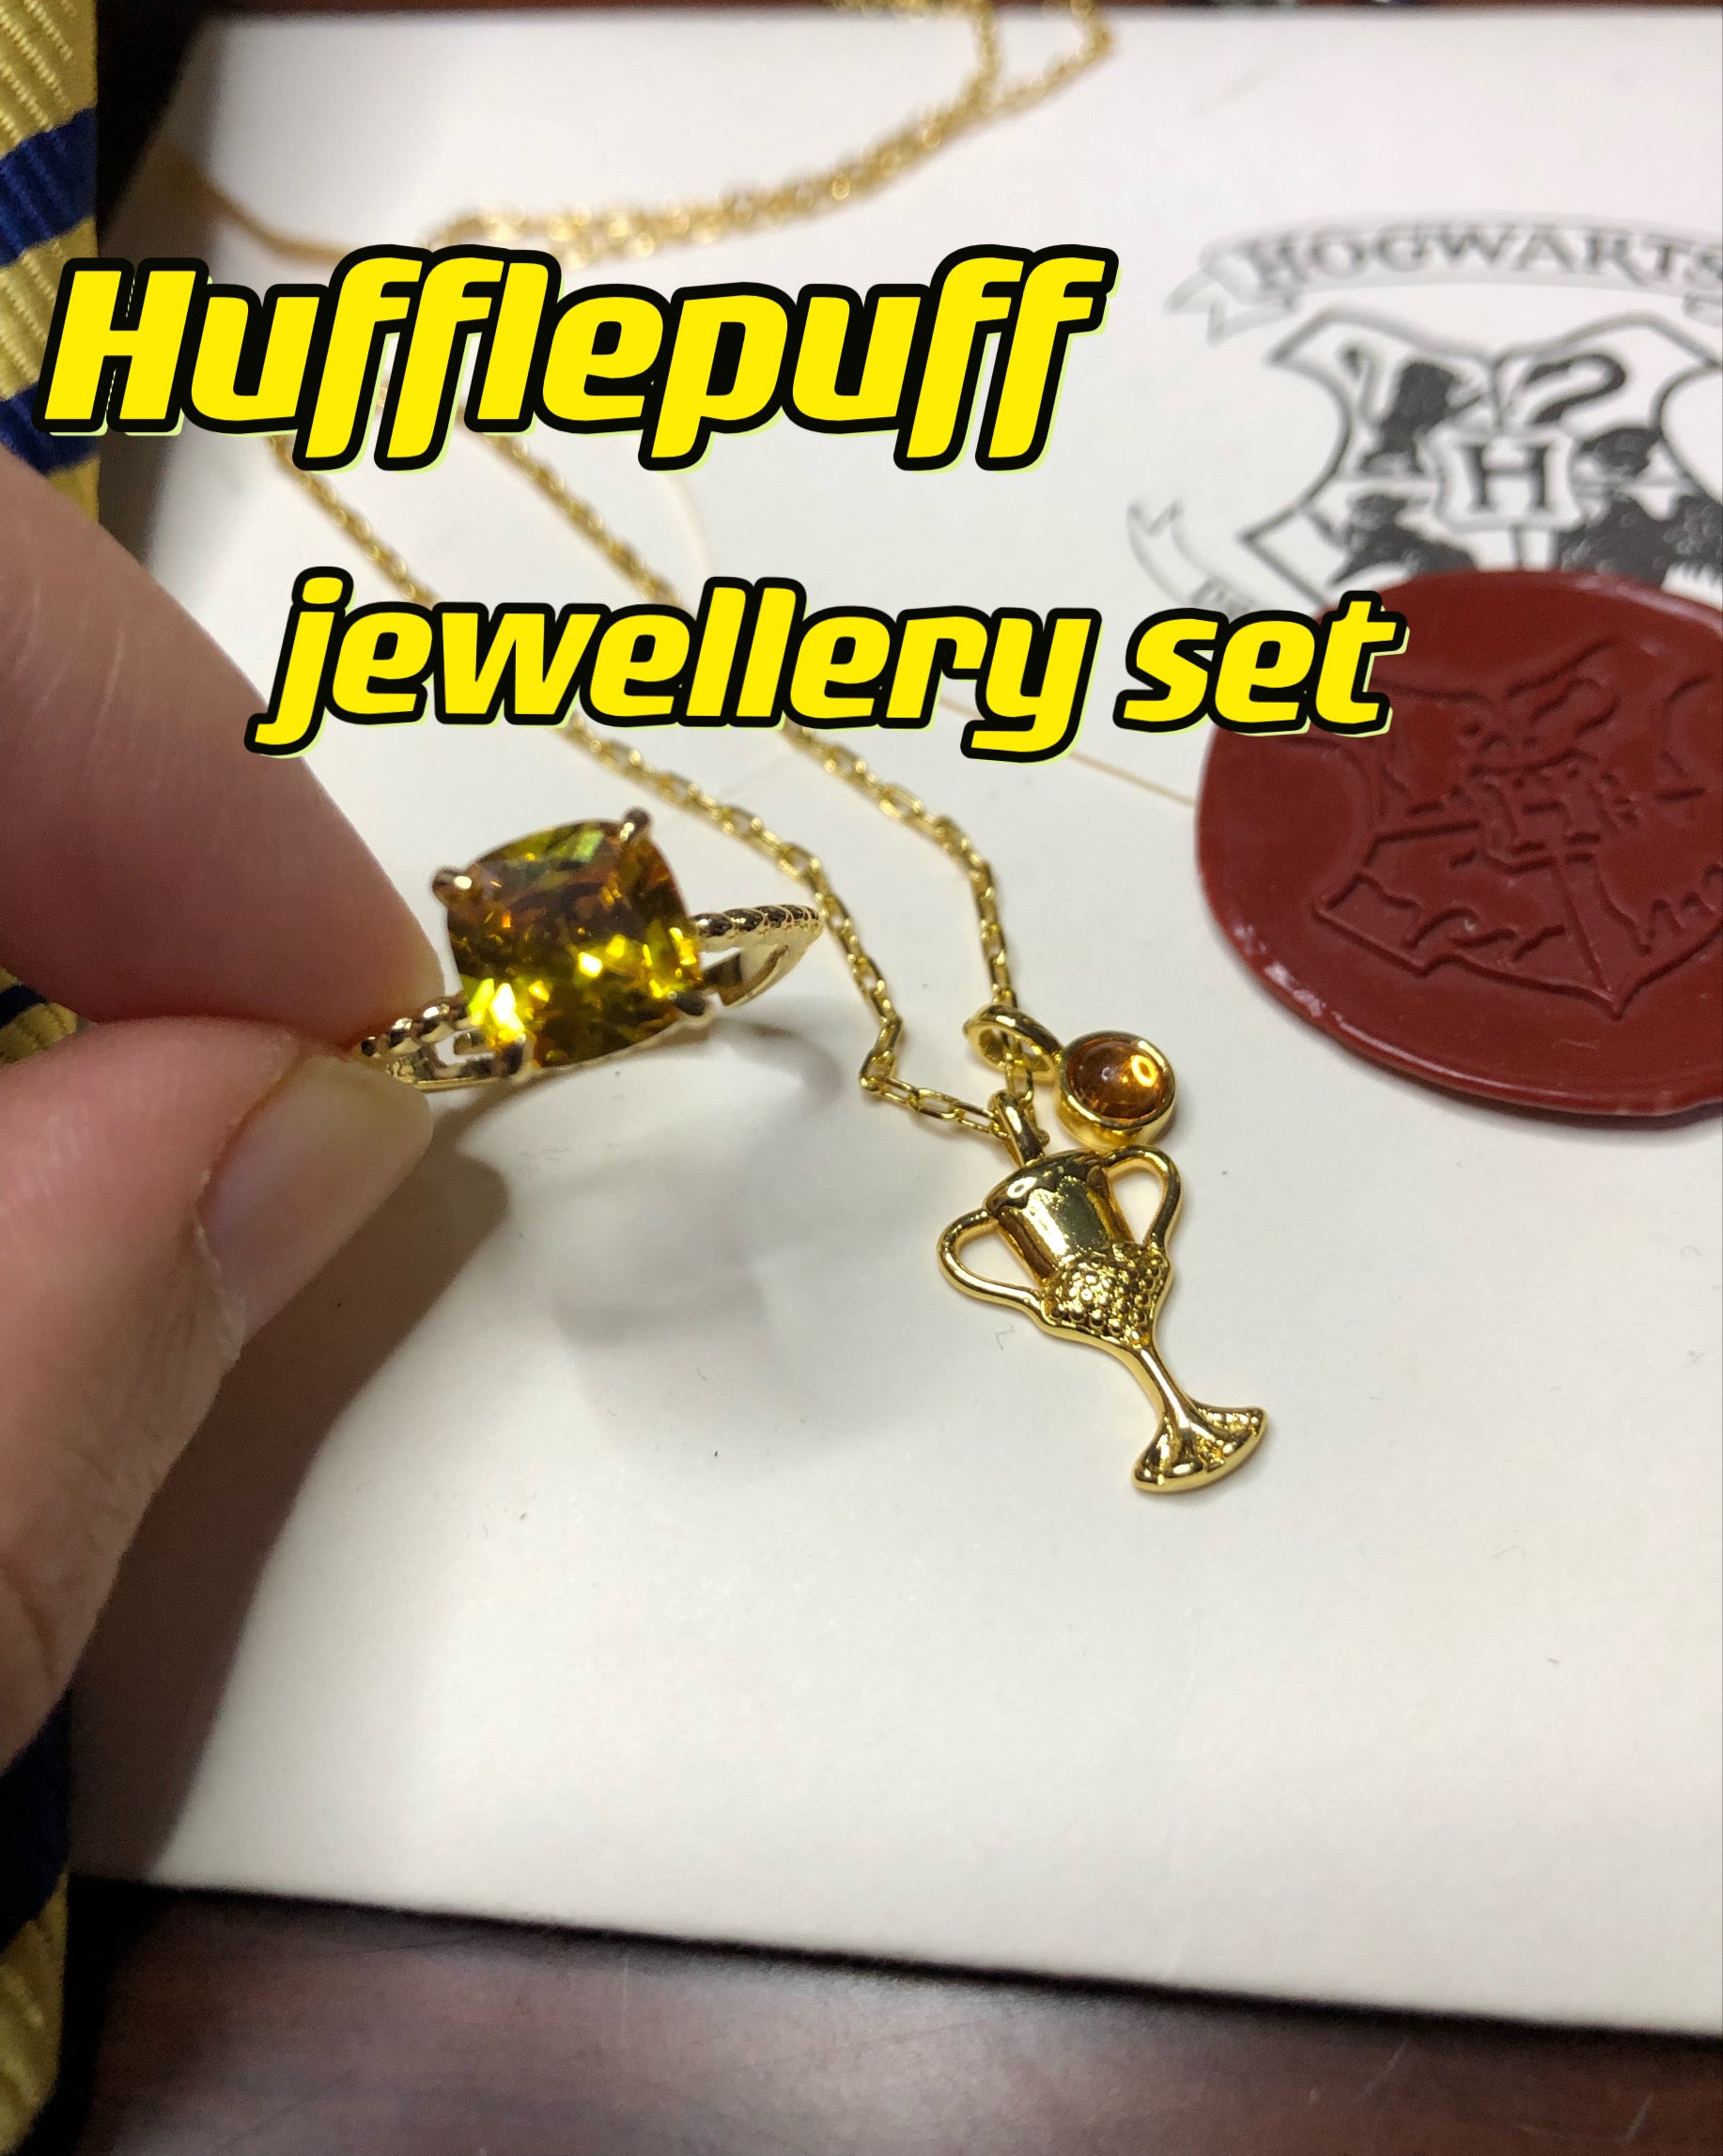 Hufflepuff jewellery set（adjustable）